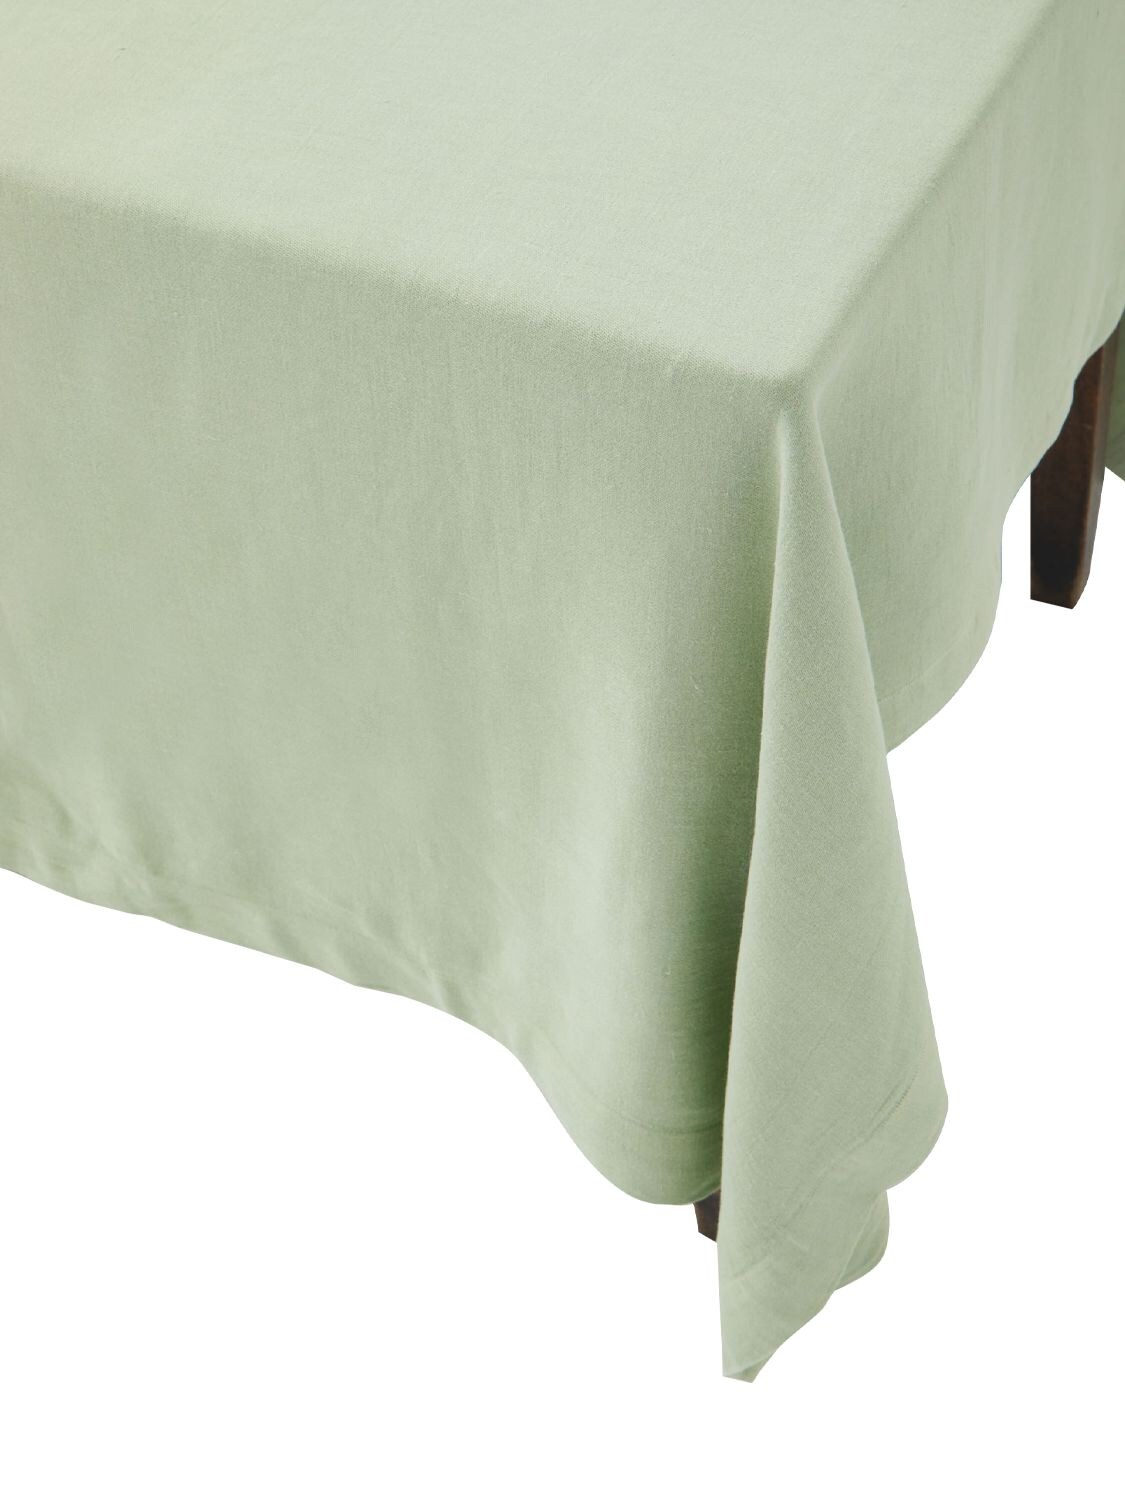 Shop Tekla Linen Tablecloth In Green